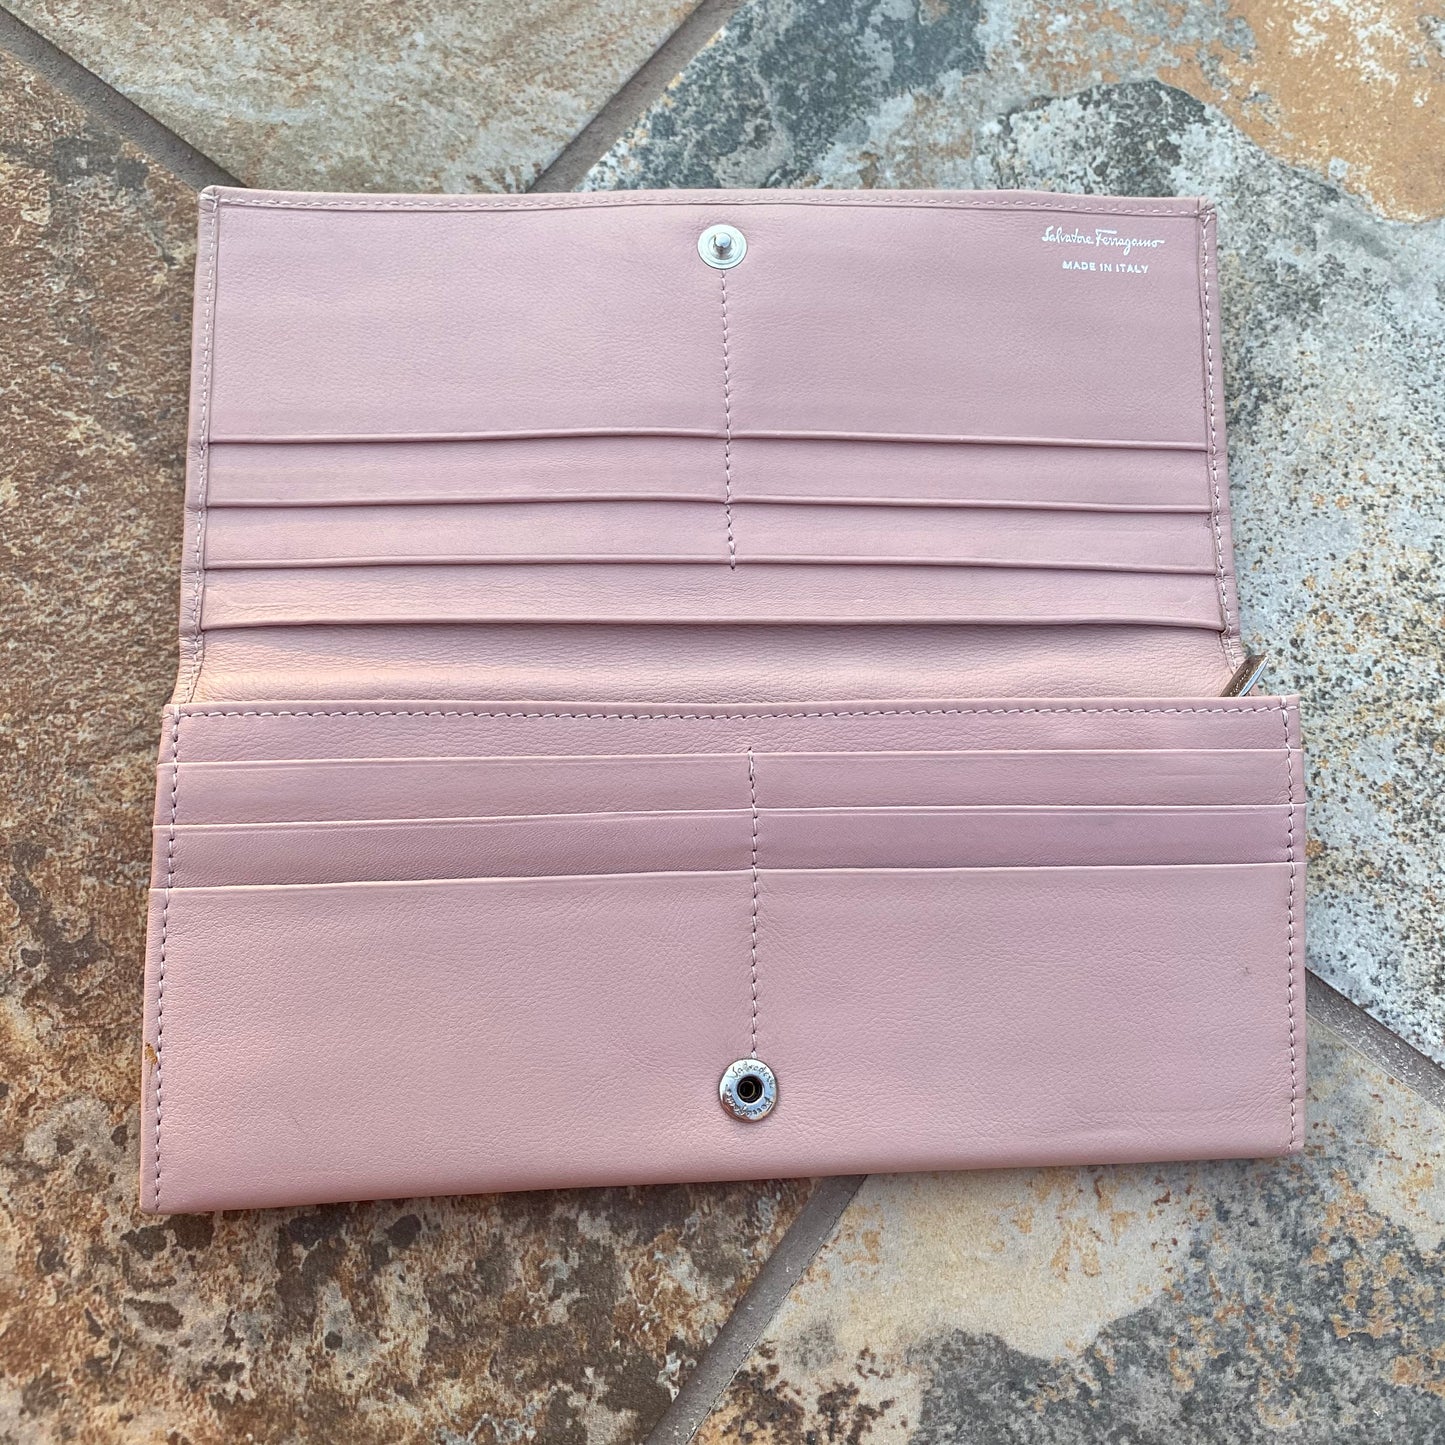 Salvatore Ferragamo Bow Leather Continental Wallet